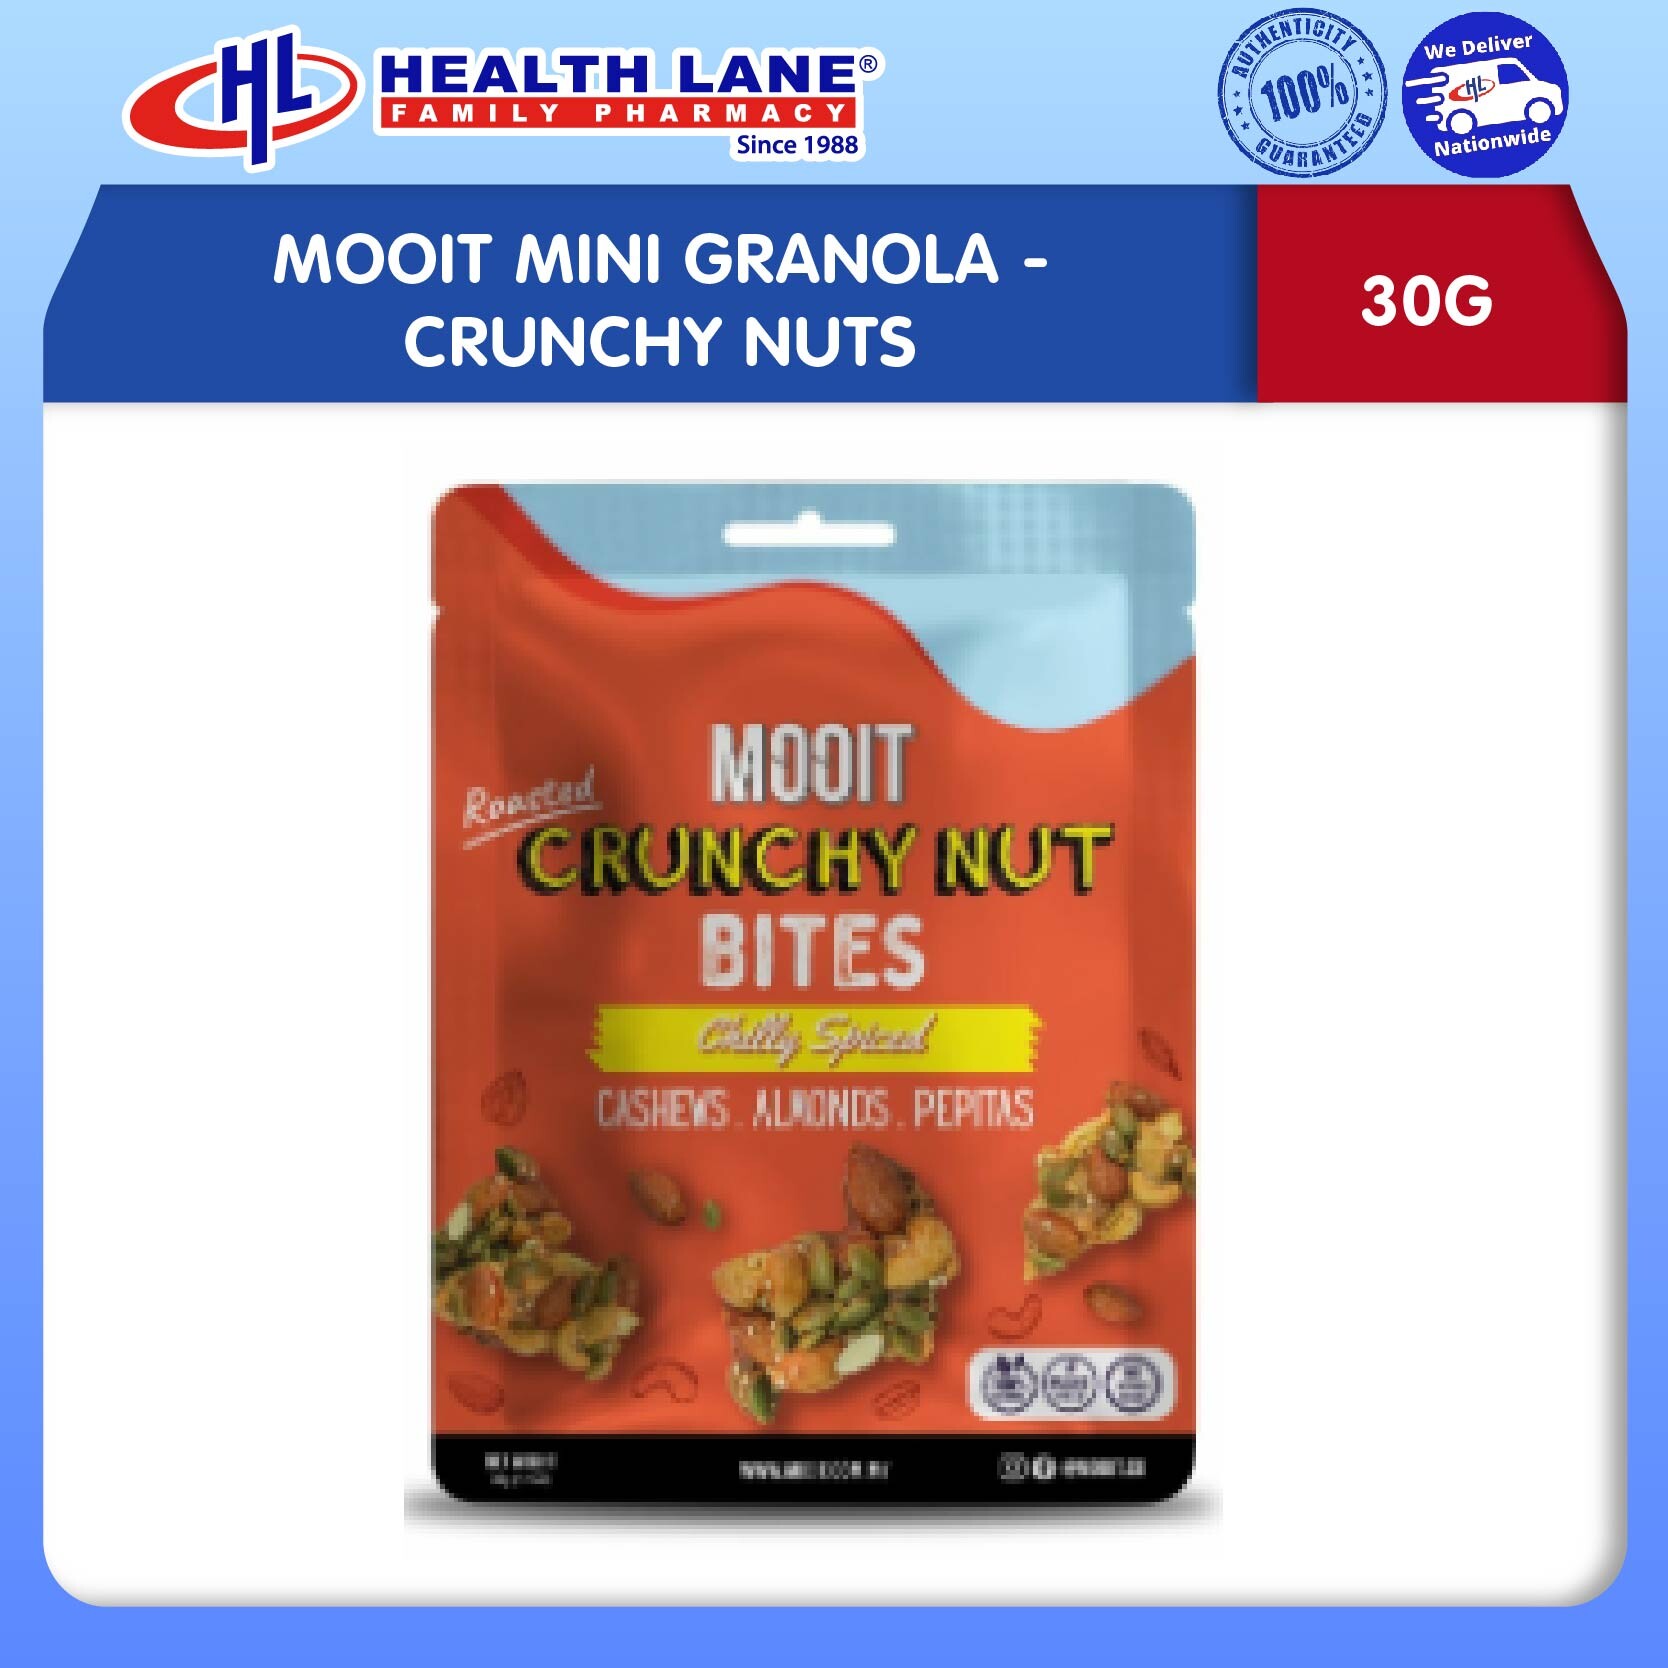 MOOIT MINI GRANOLA - CRUNCHY NUTS (30G)